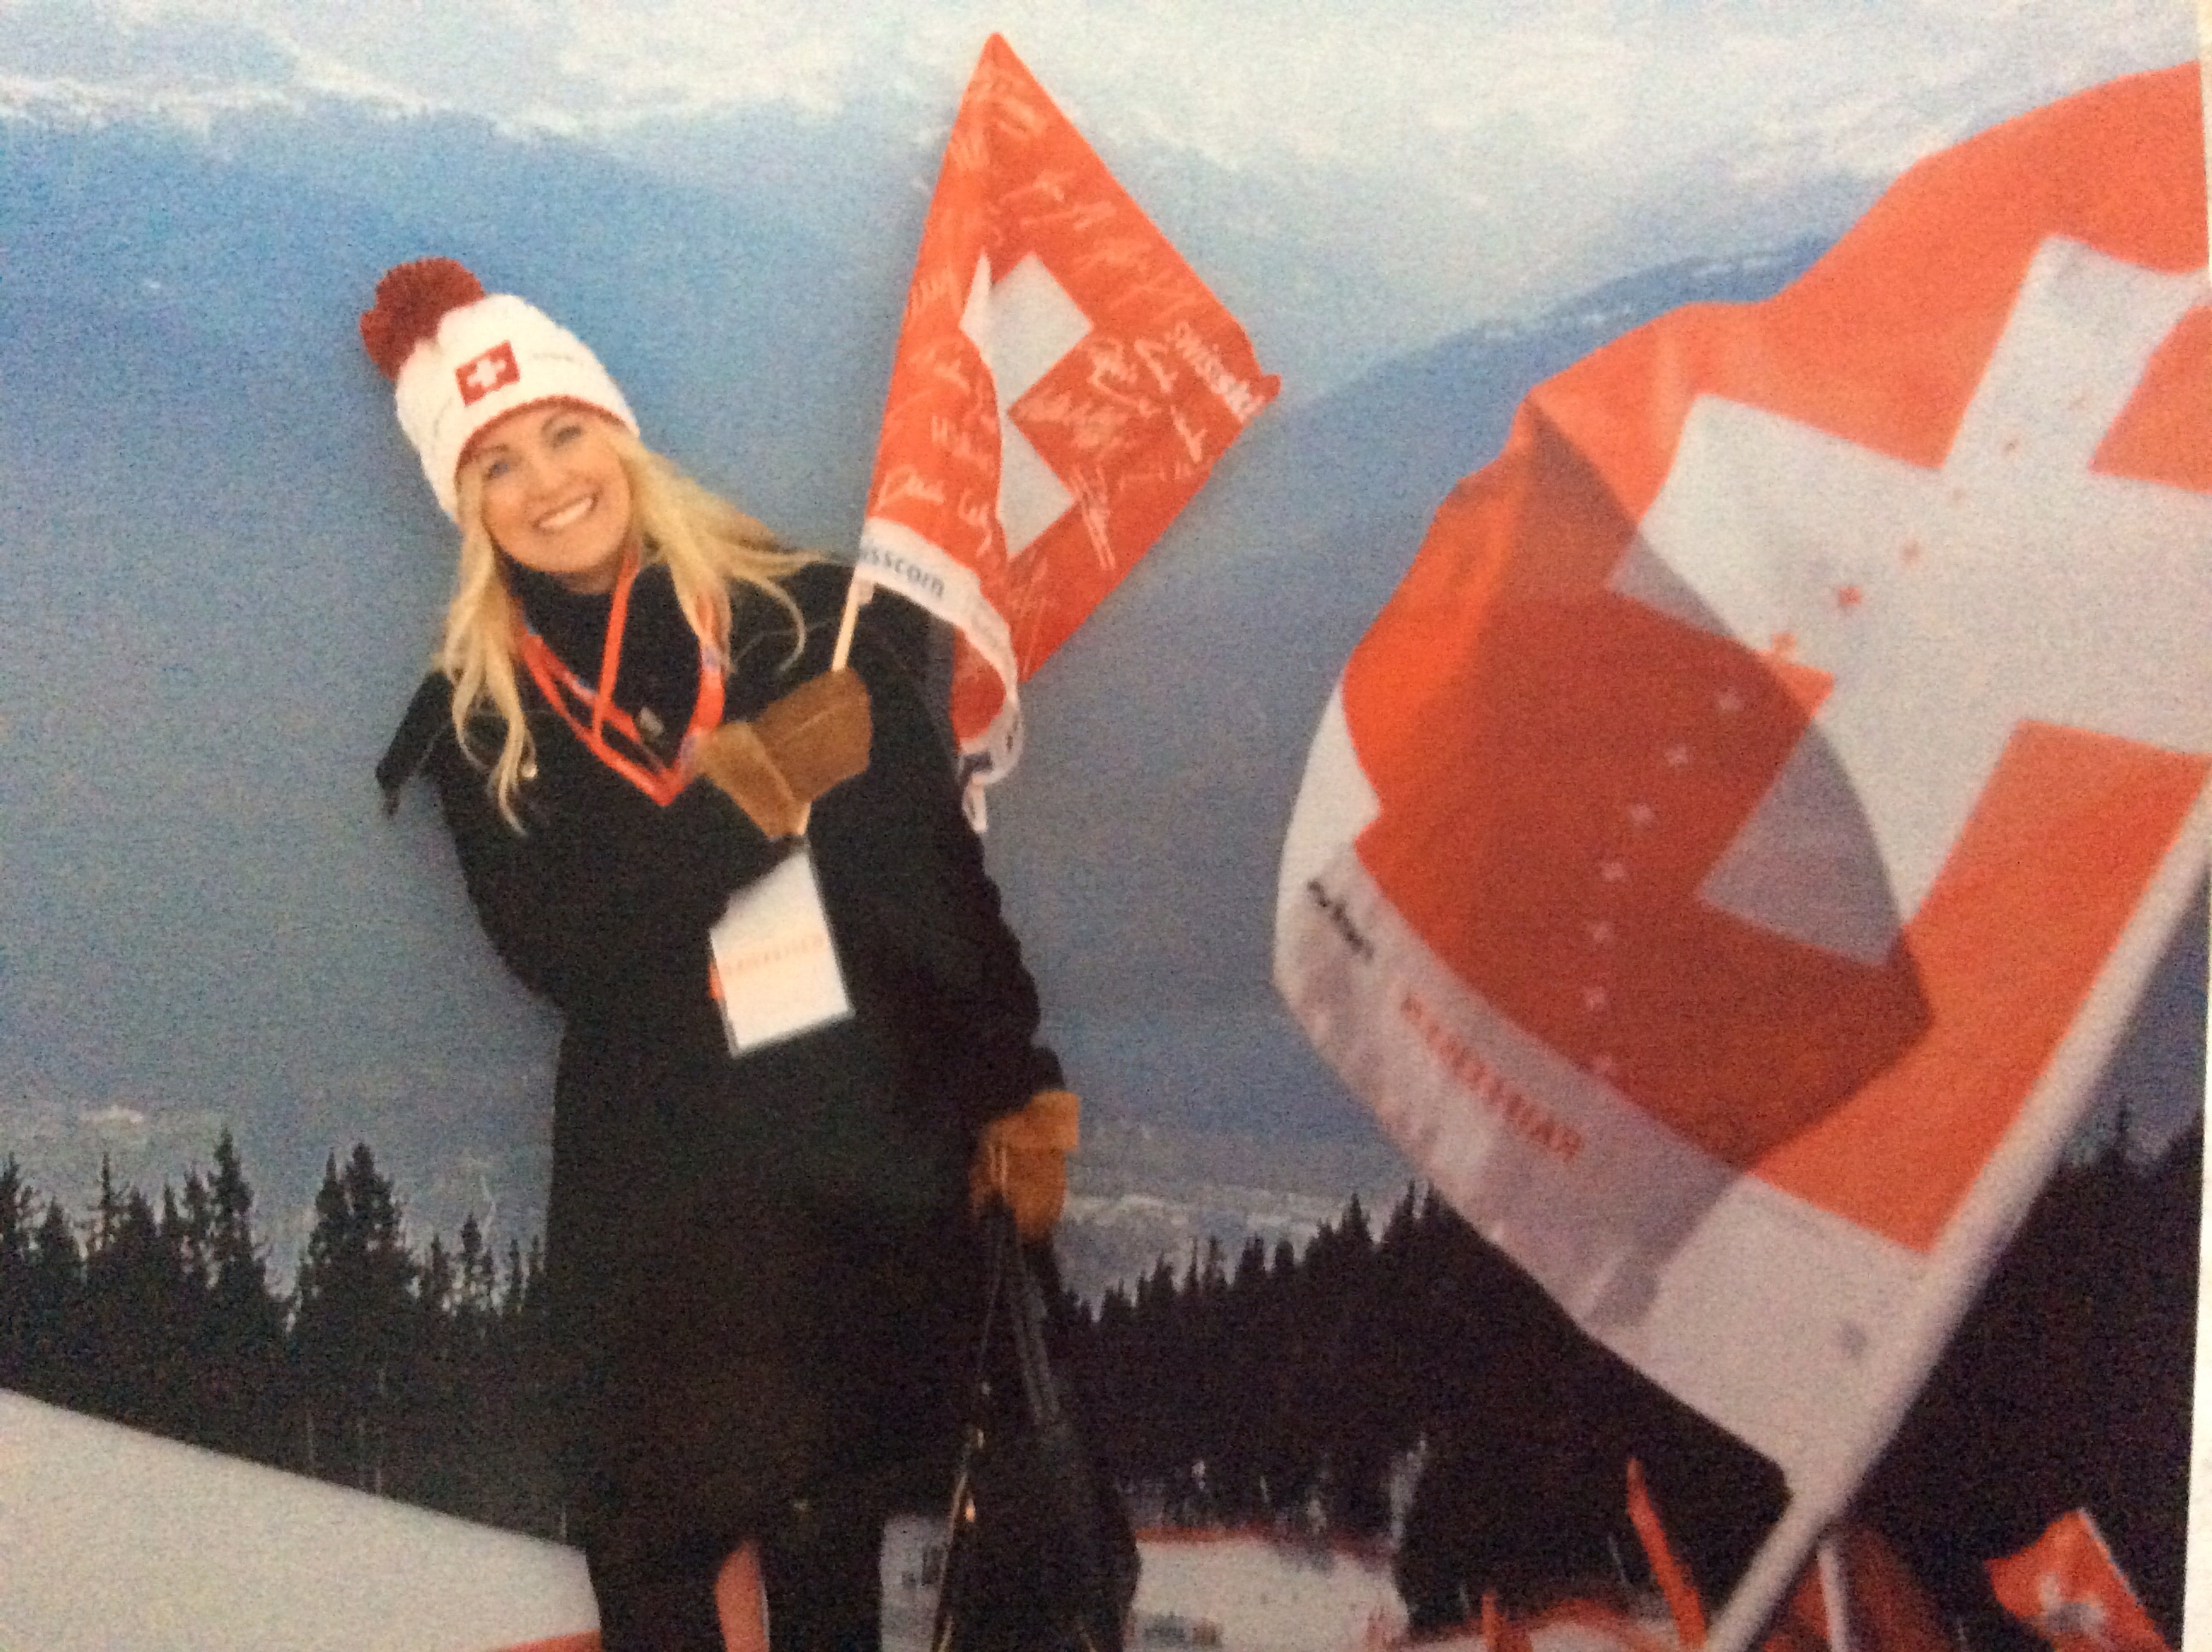 Beatrice de Borg at worldcup ski race - downhill women